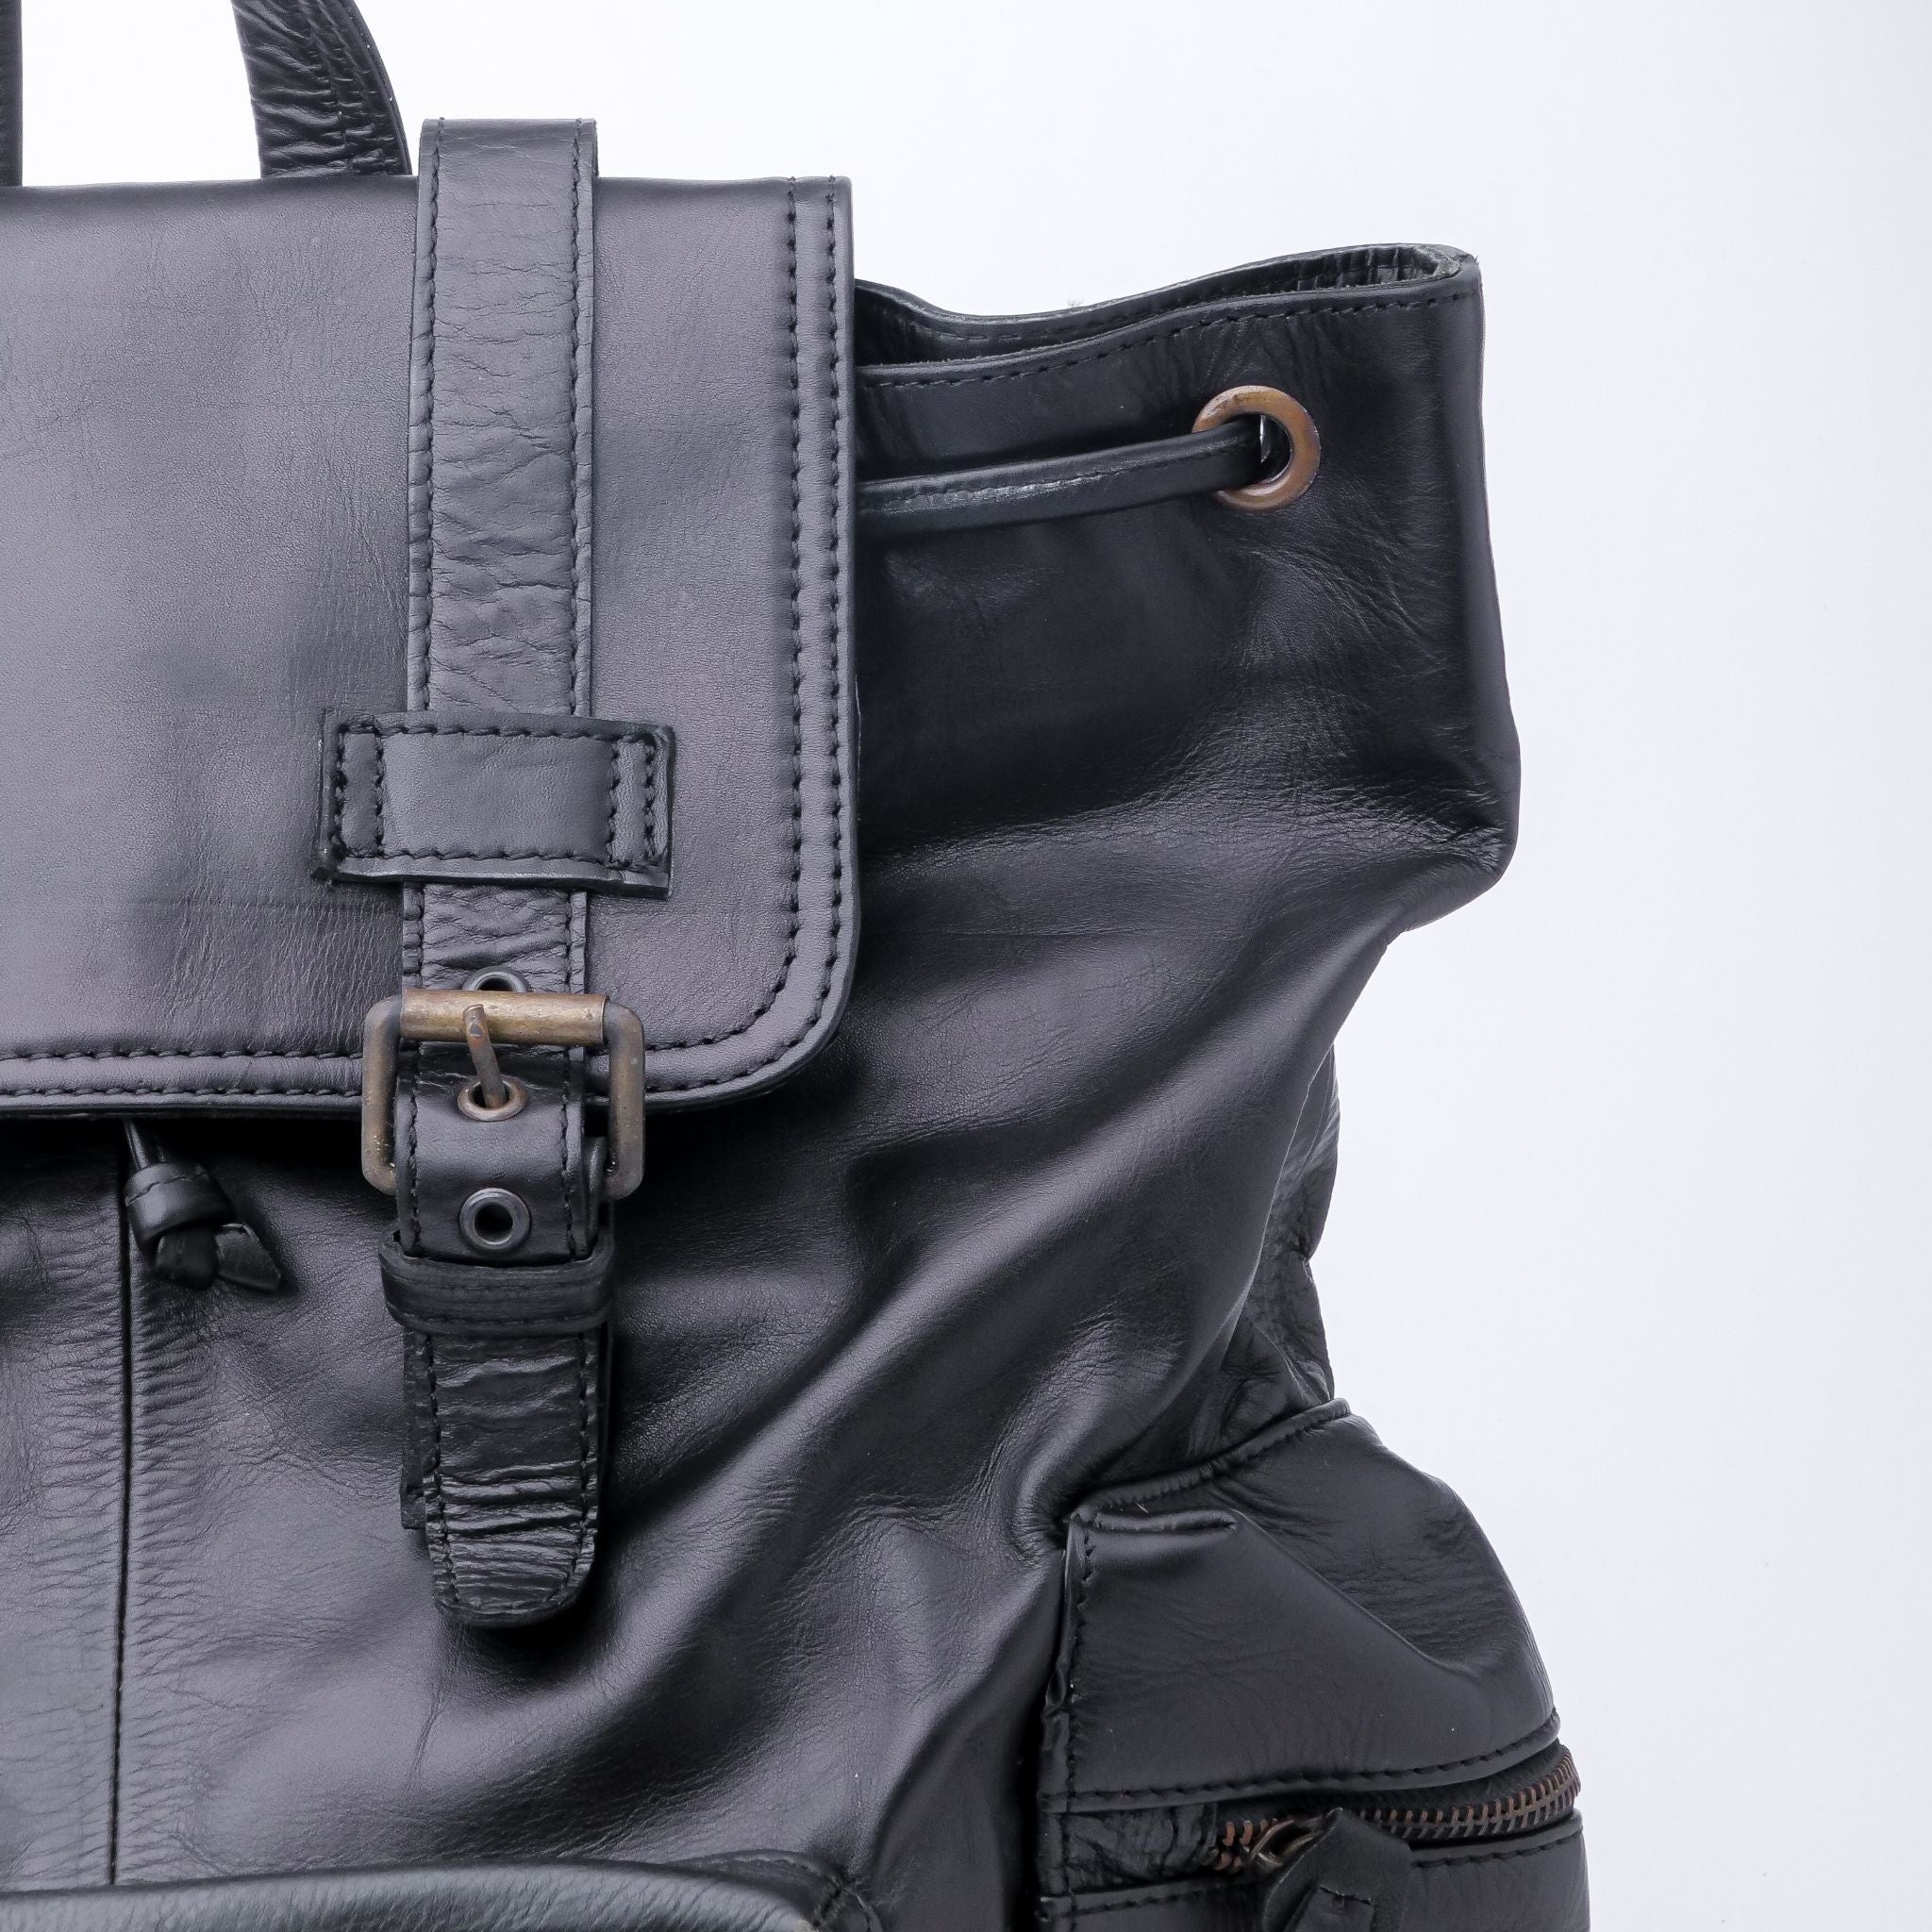 Granite Black Leather Backpack Travel Laptop Office Bag